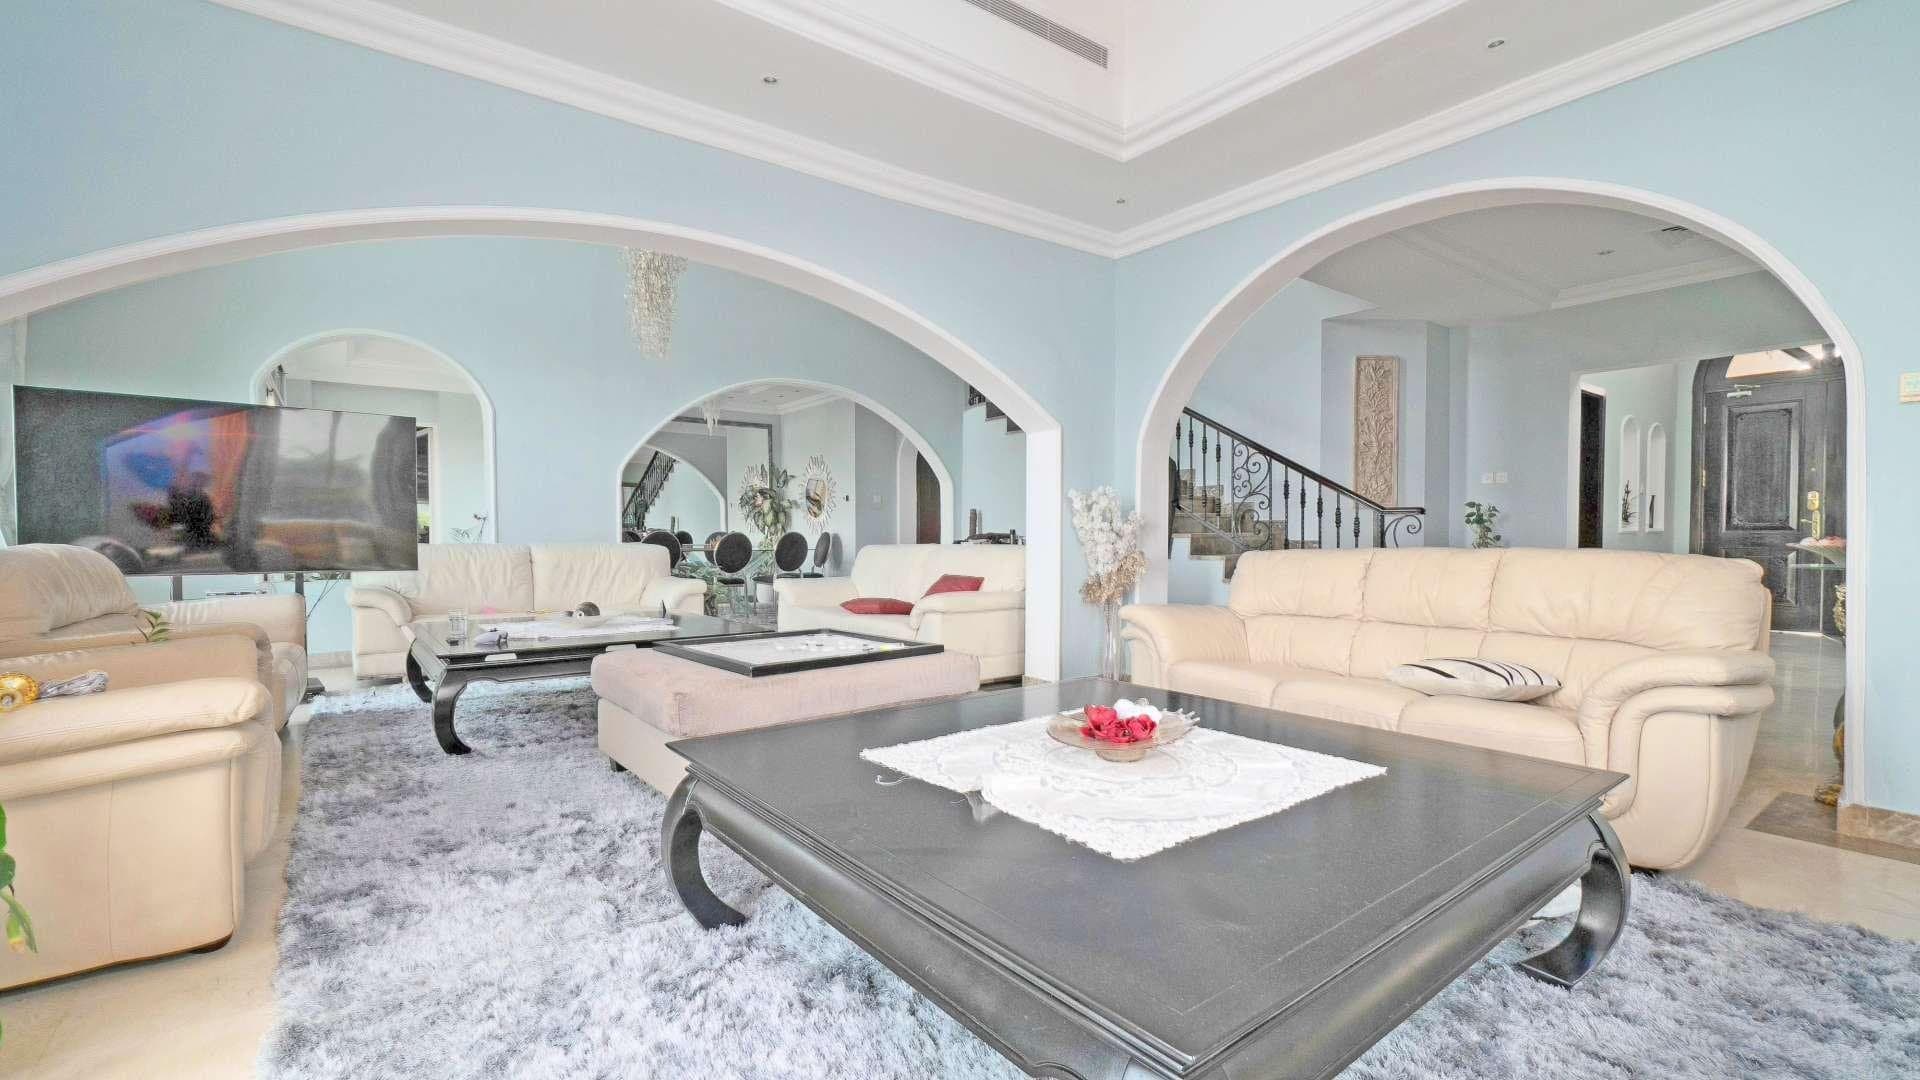 4 Bedroom Villa For Sale European Clusters Lp18252 1cadc56590b38d00.jpg